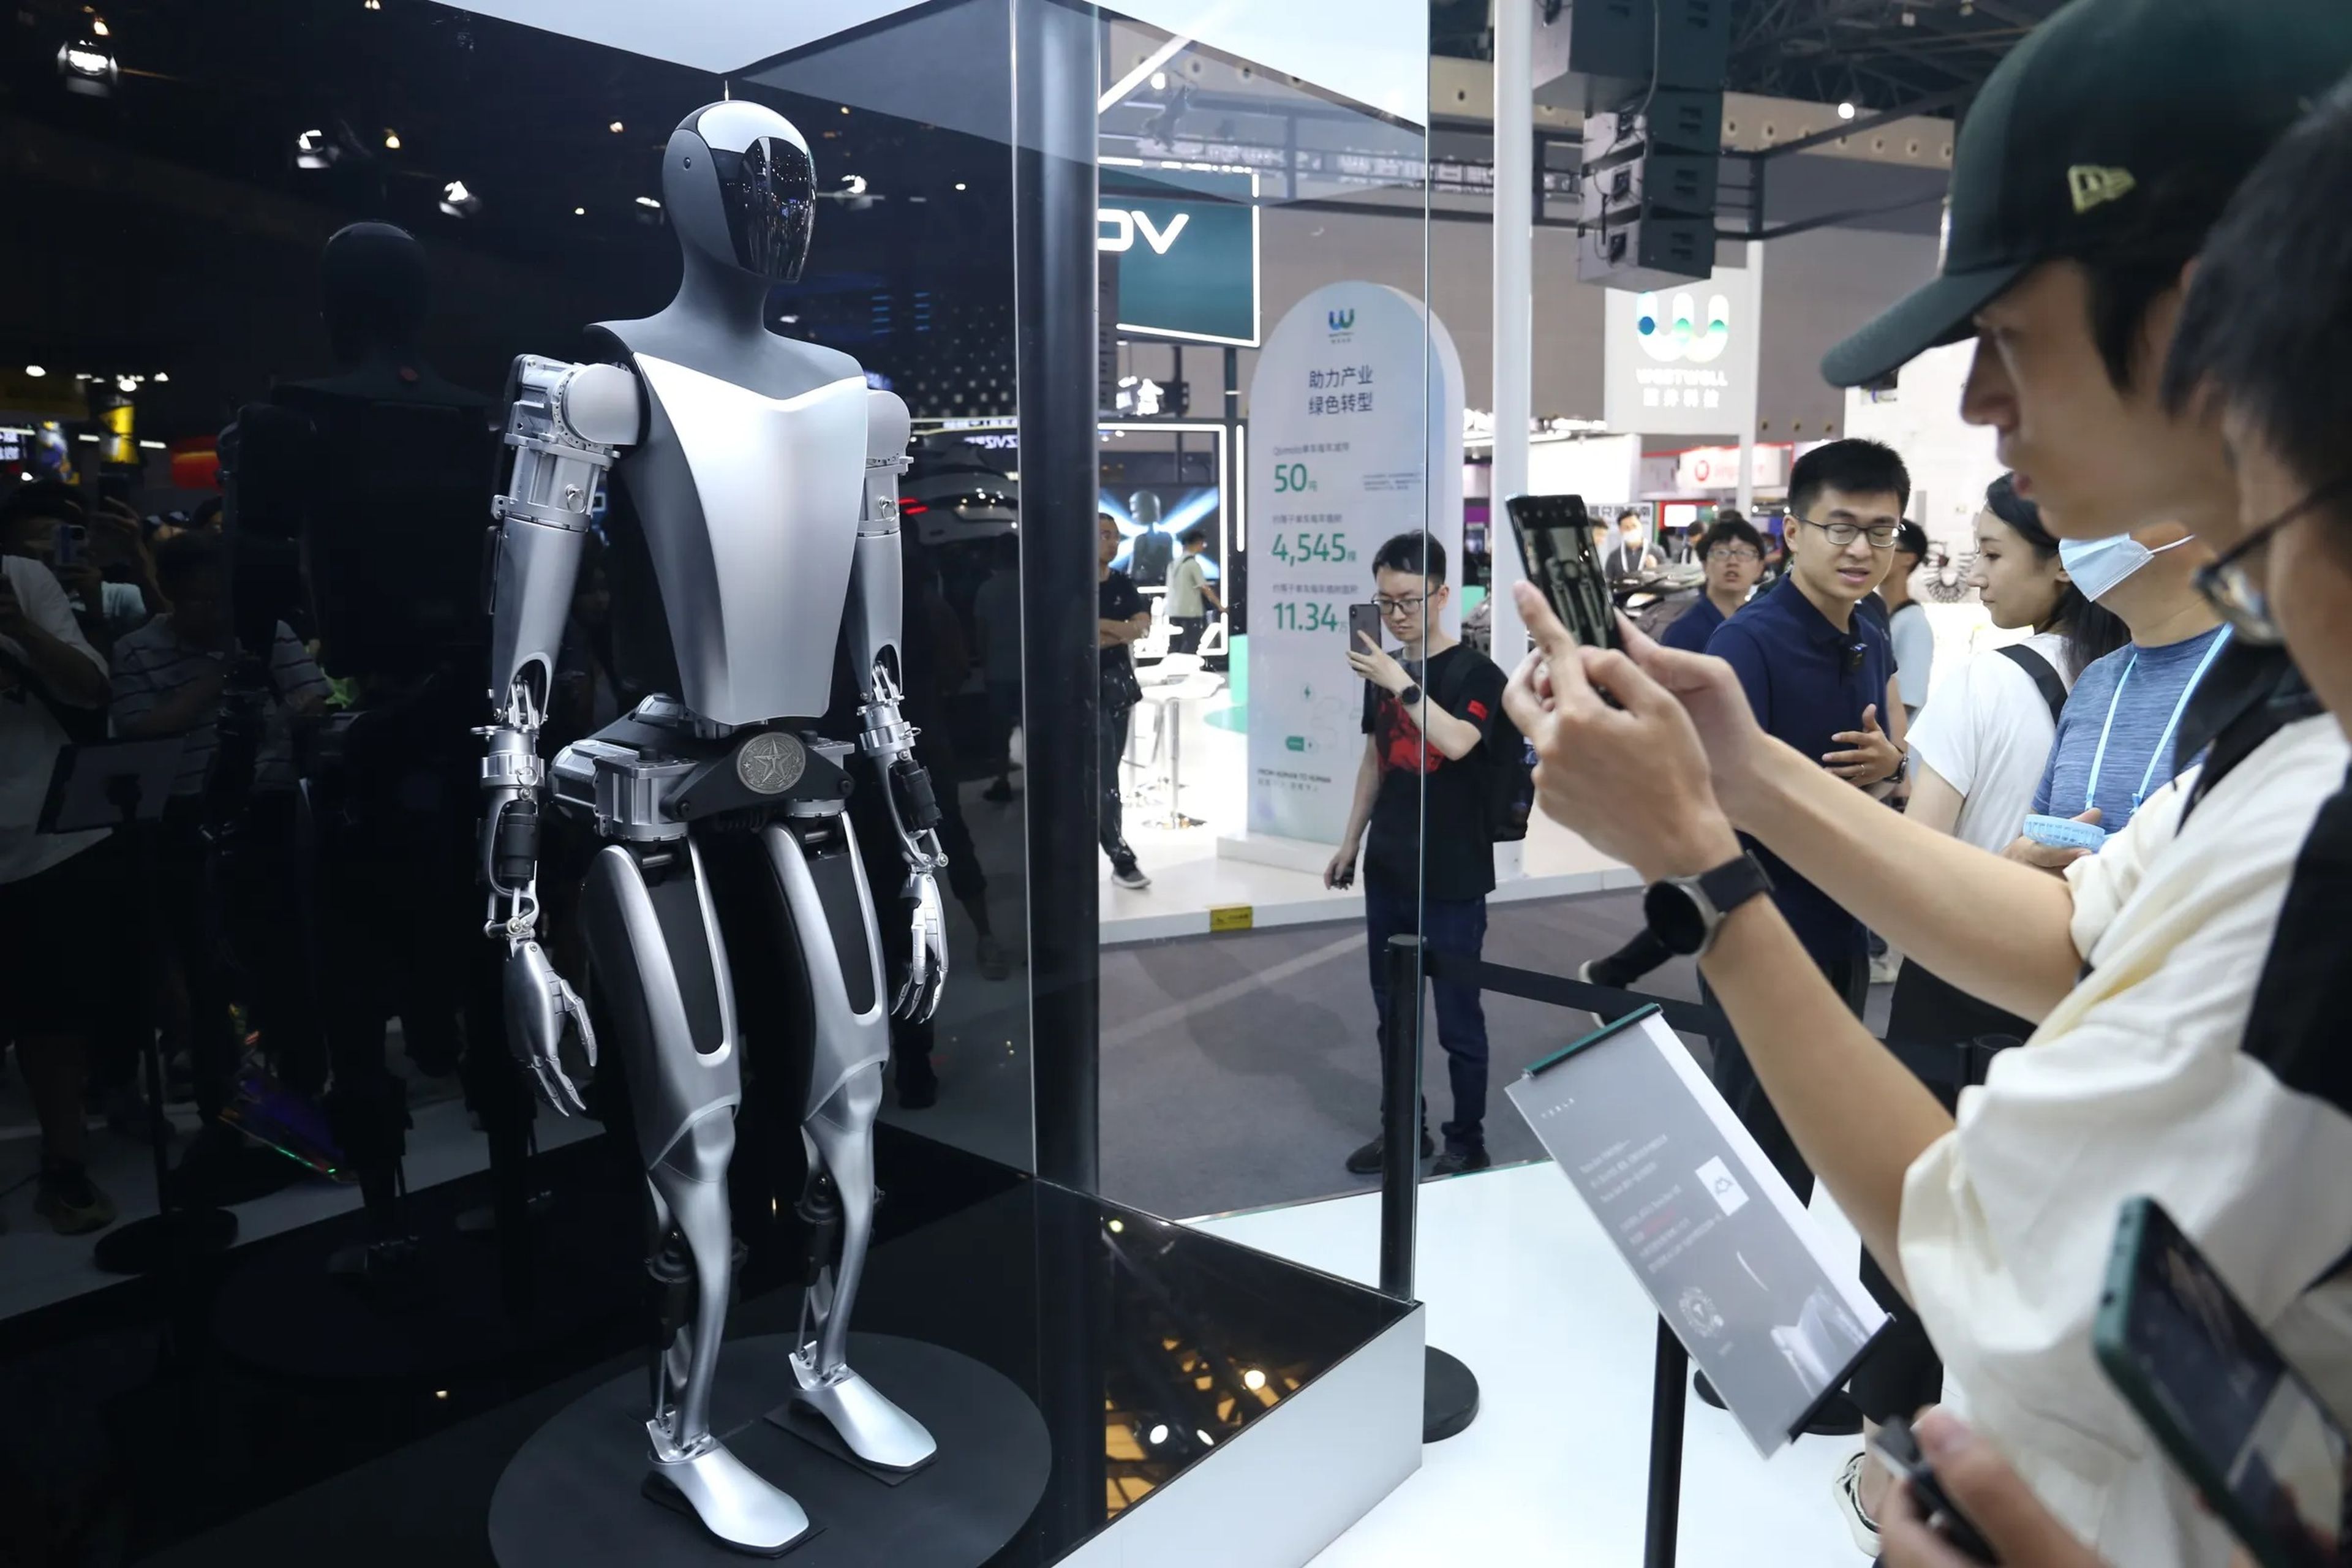 Tesla's Optimus humanoid robot on display